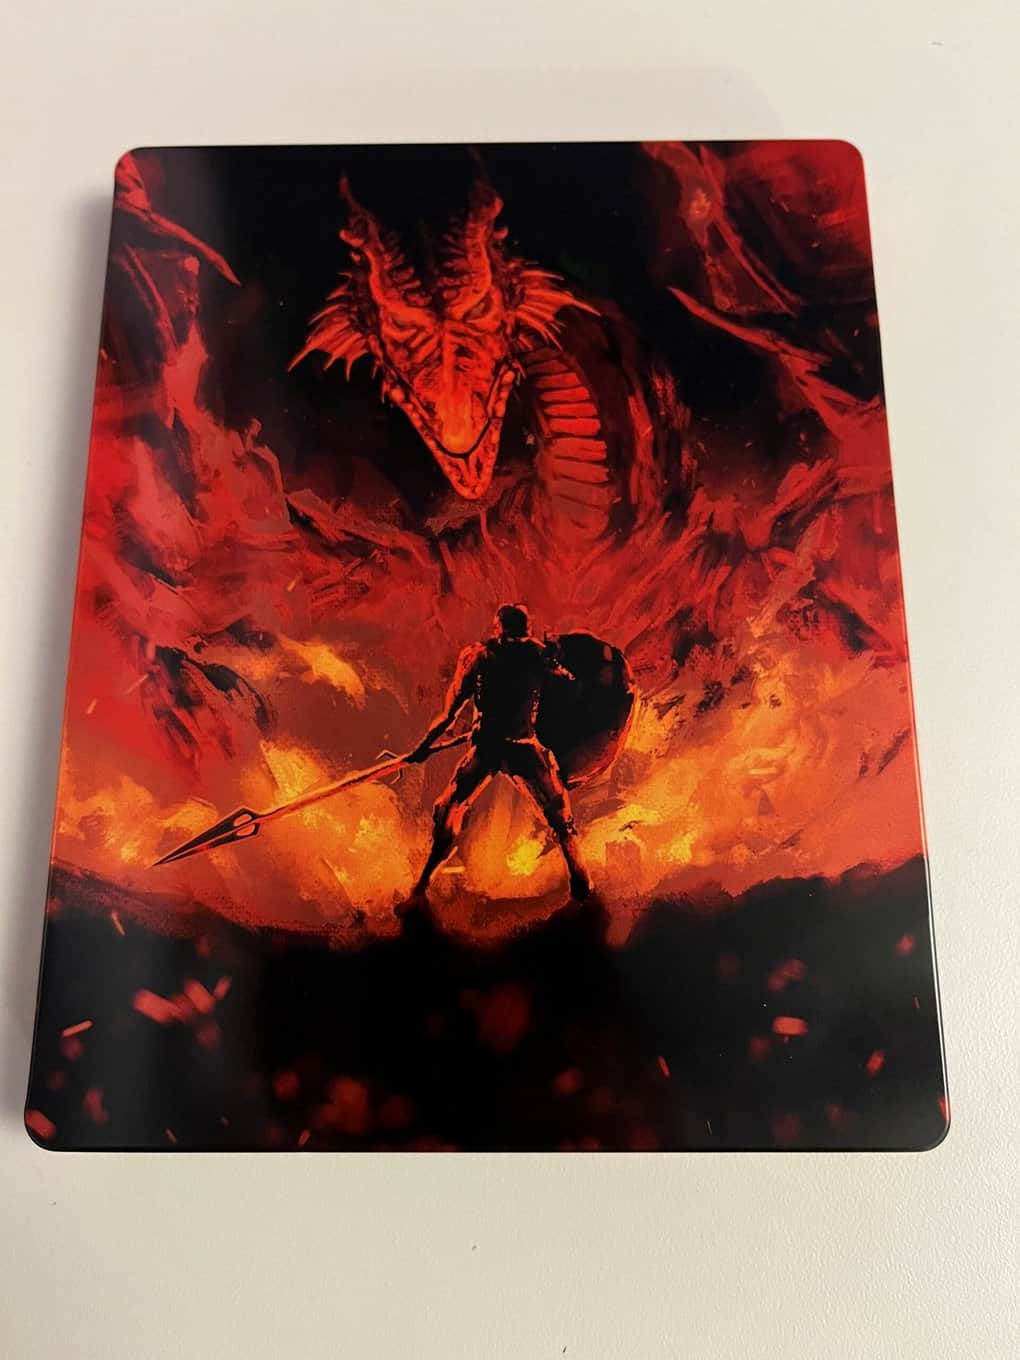 Best Buy: Dragonslayer [SteelBook] [Includes Digital Copy] [4K Ultra HD  Blu-ray] [1981]